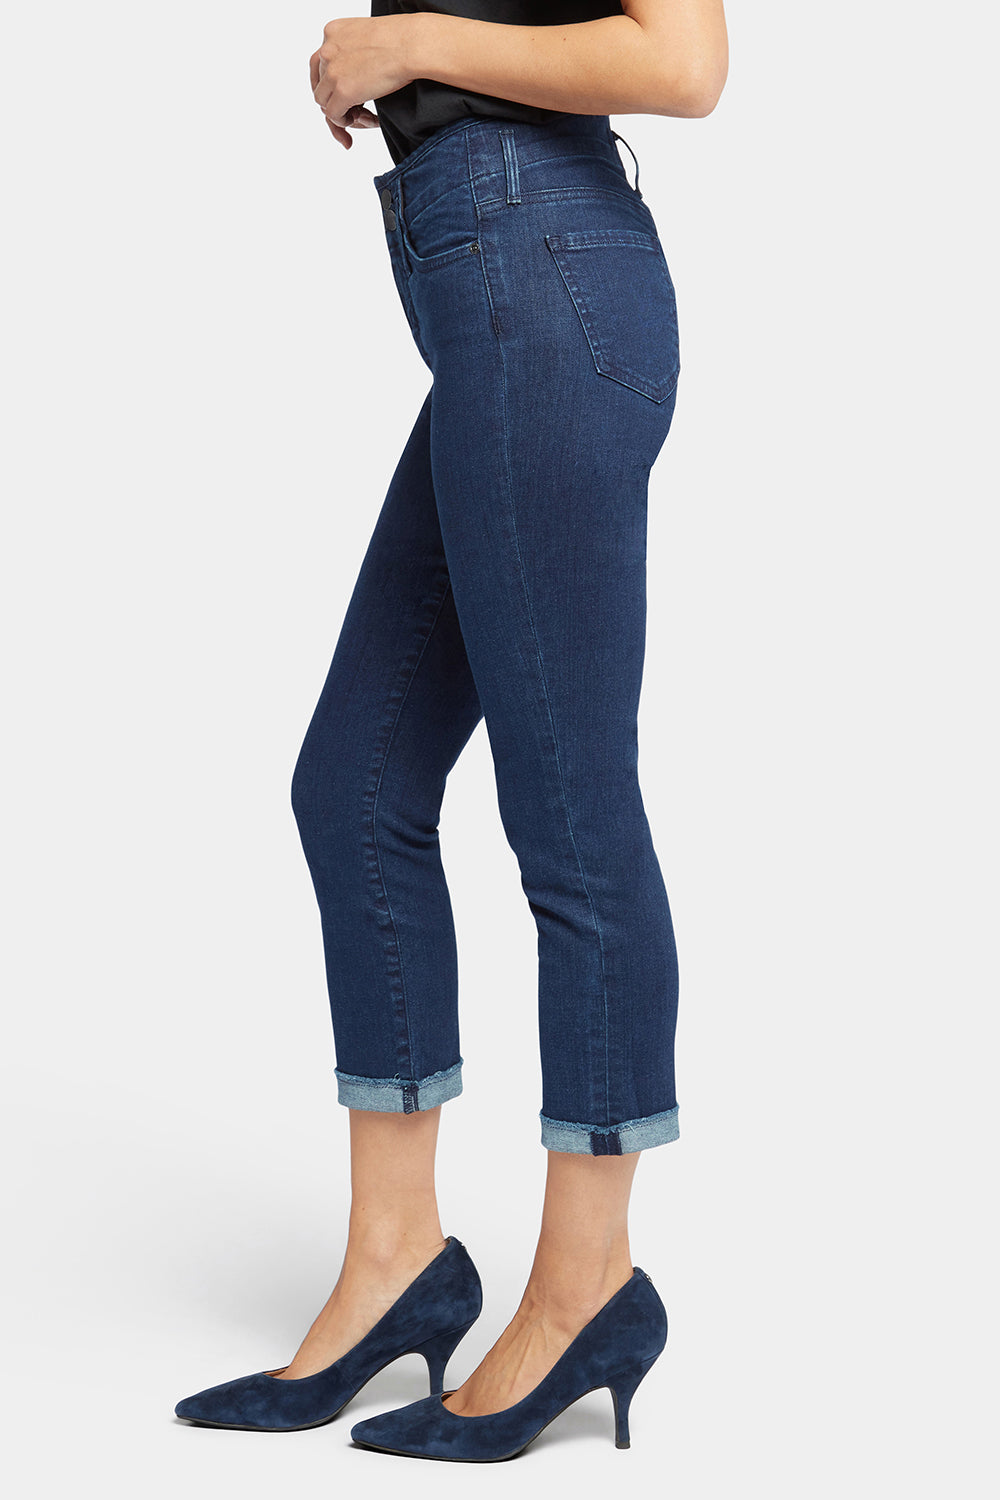 NYDJ Chloe Capri Jeans With Cuffs - Mystique